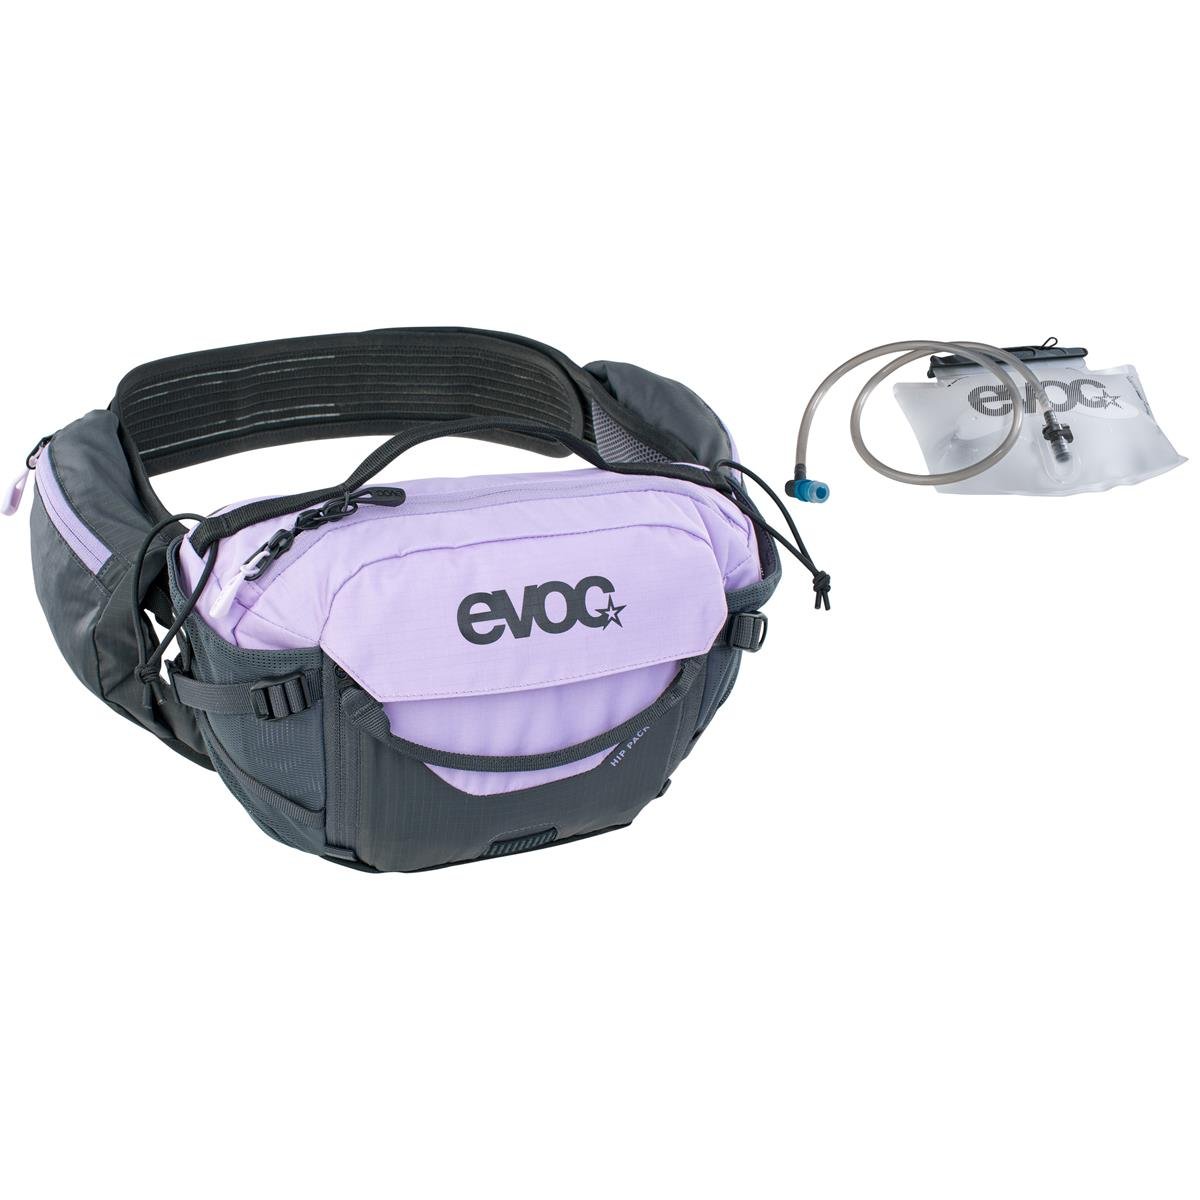 Evoc Hüfttasche mit Trinksystem inkl. 1.5L Blase Pro 3 L